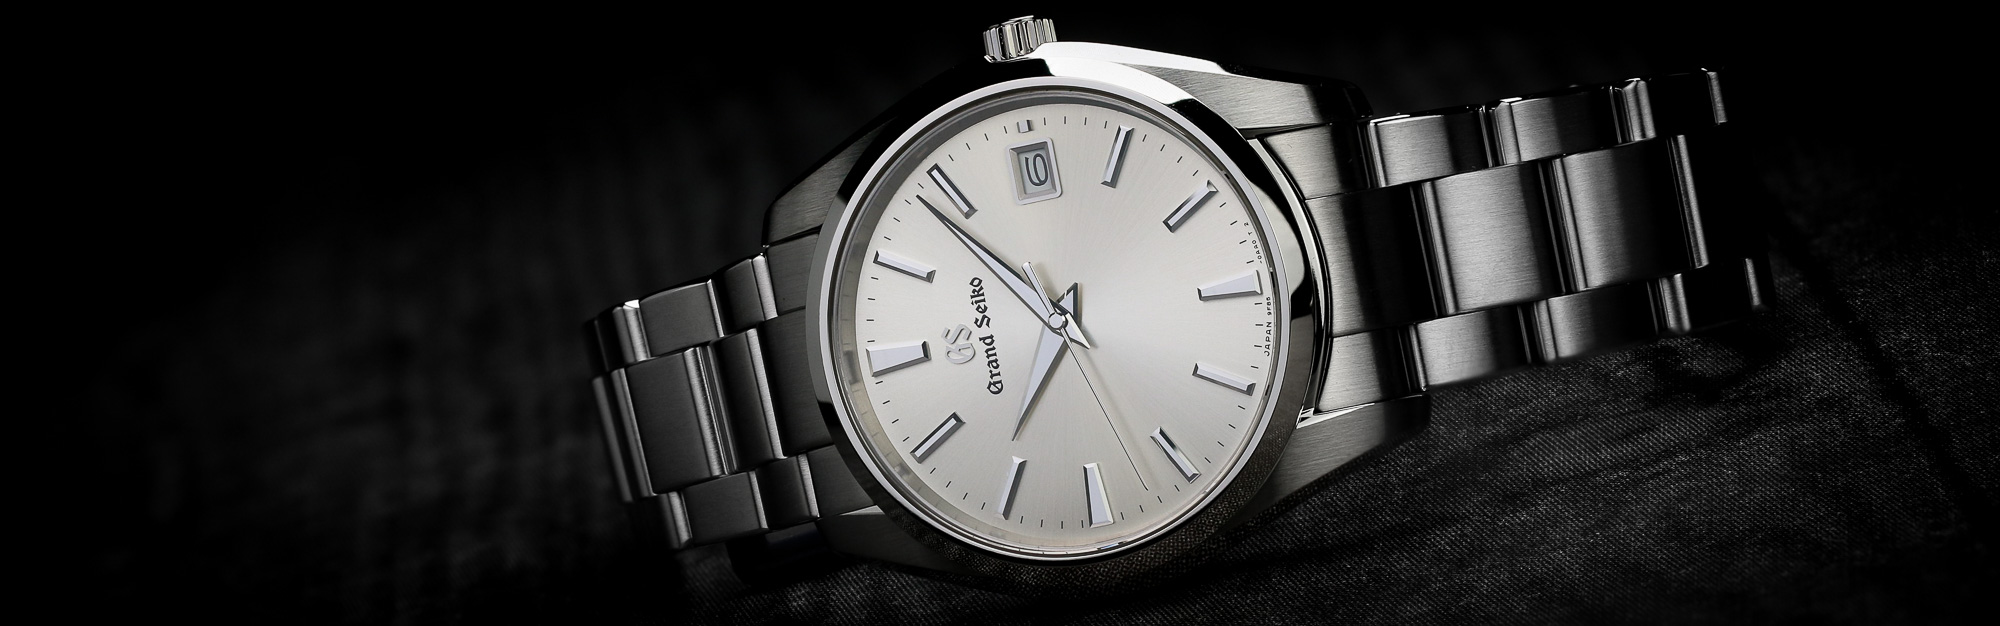 Grand Seiko SBGP009 white dial wristwatch on its side.